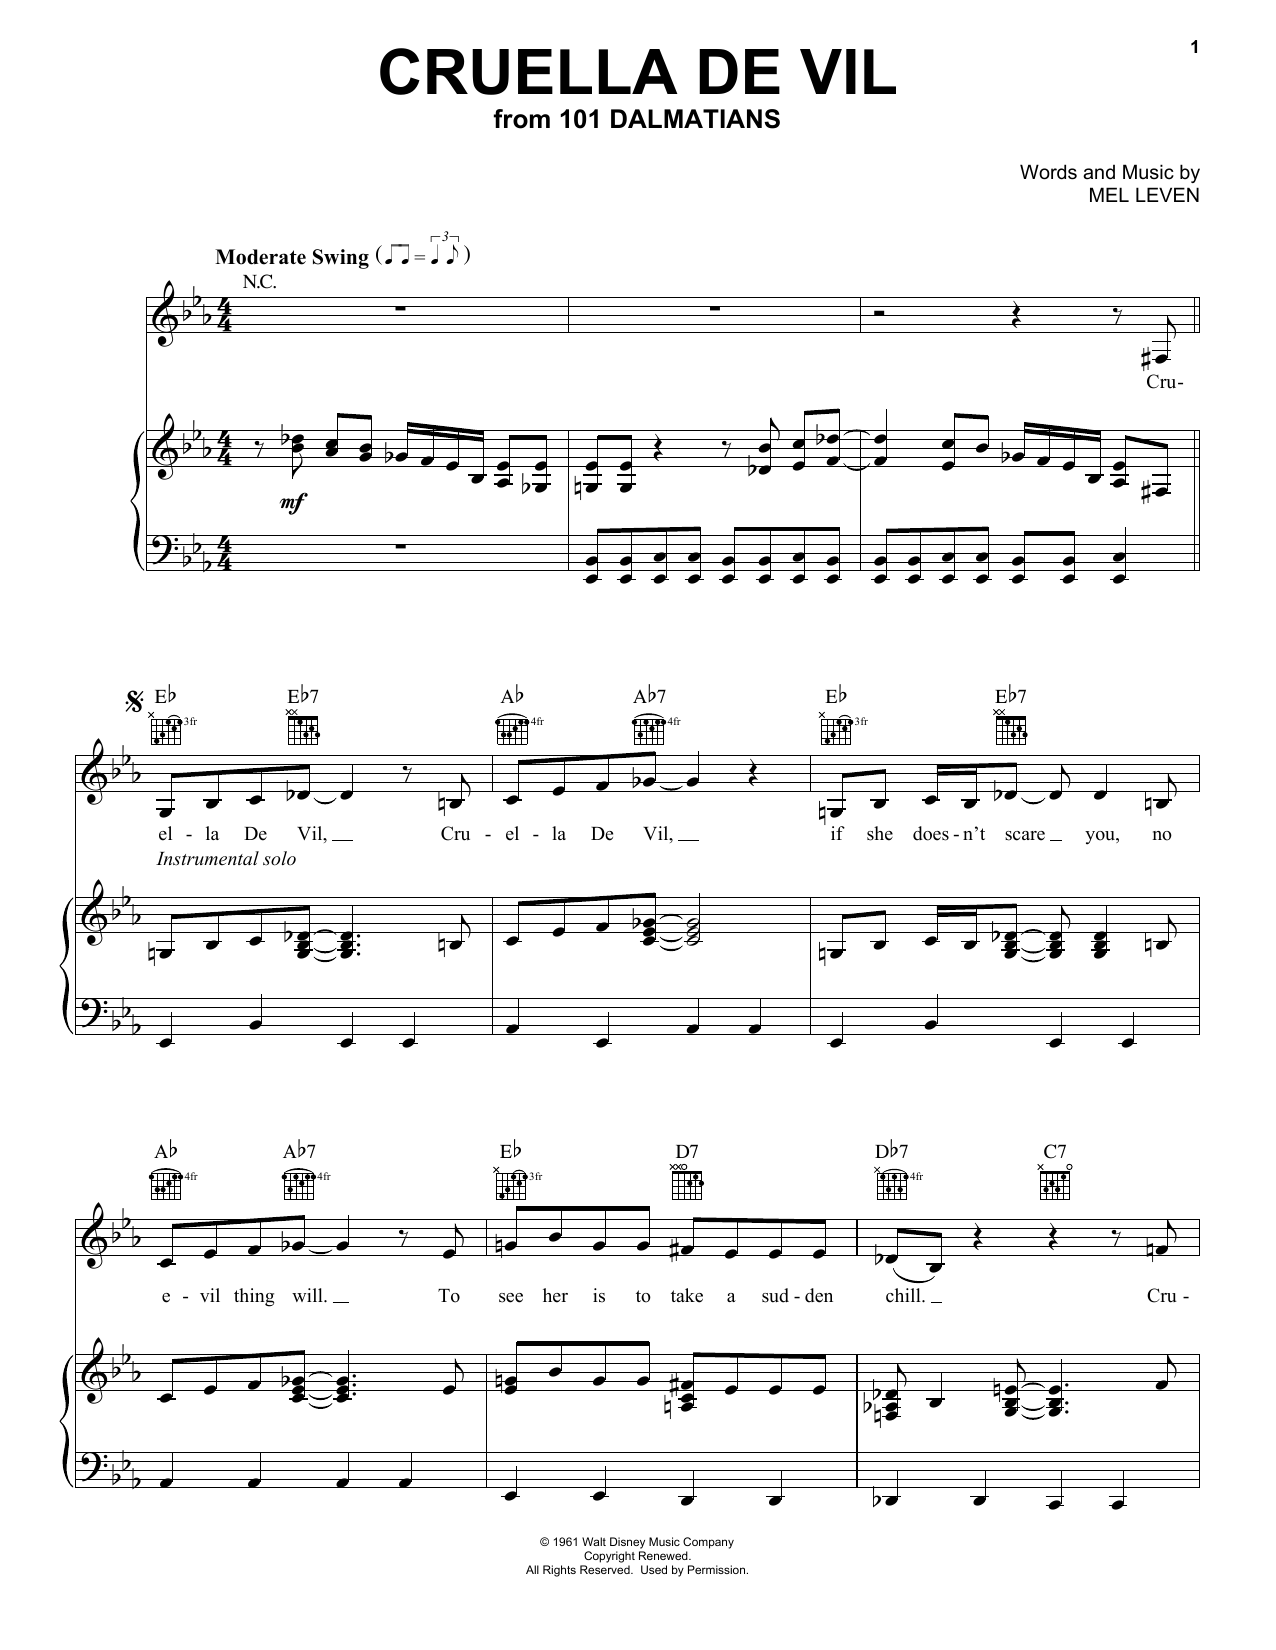 Download Mel Leven Cruella De Vil Sheet Music and learn how to play Banjo PDF digital score in minutes